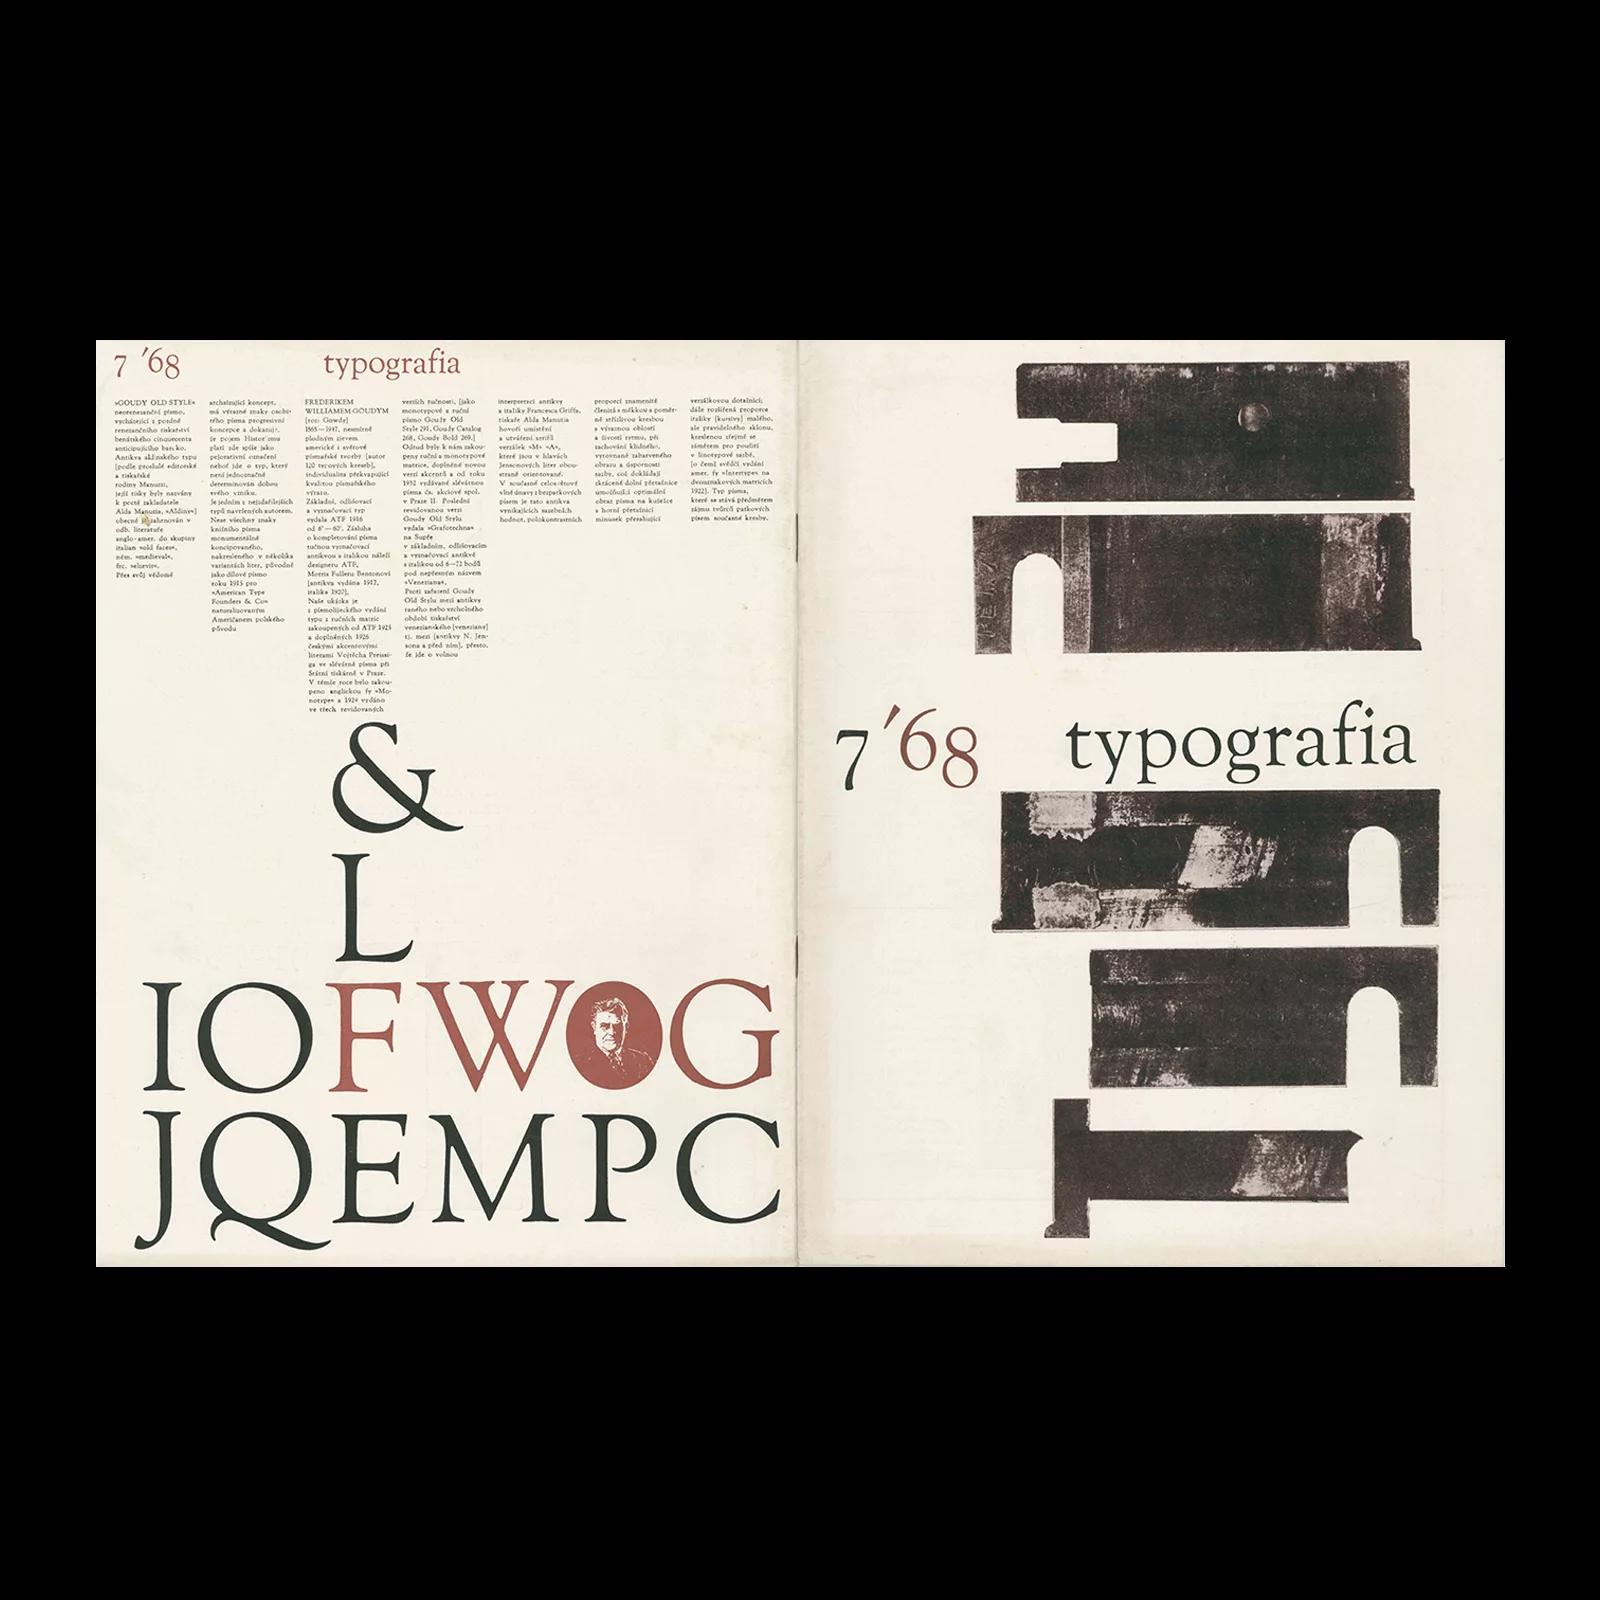 Typografia, ročník 71, 07, 1968. Cover design by Roman Rogl